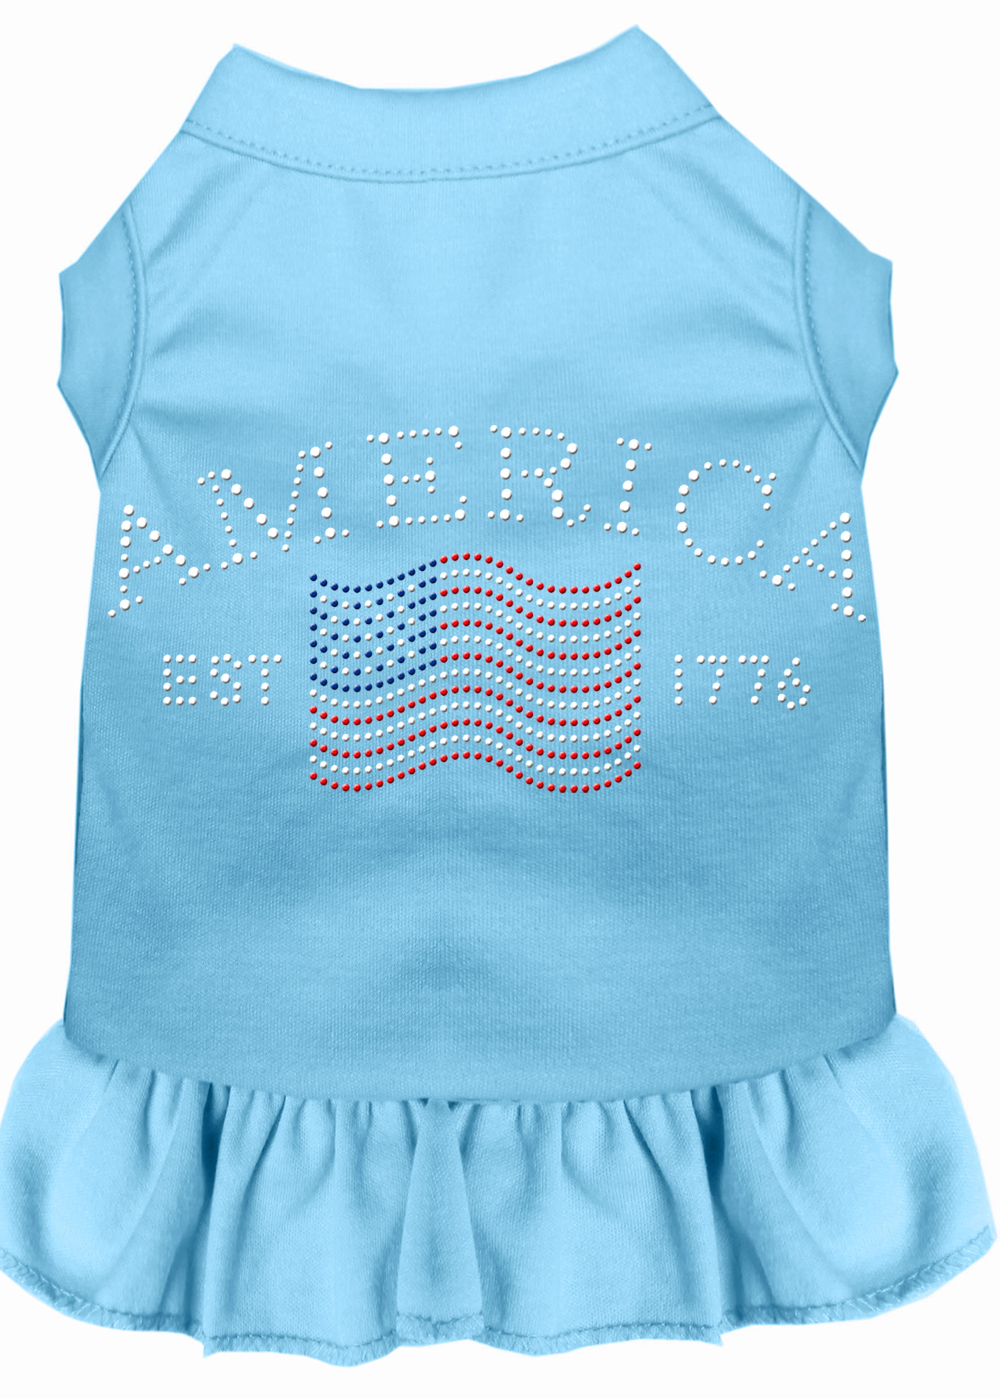 Classic America Rhinestone Dress Baby Blue 4X